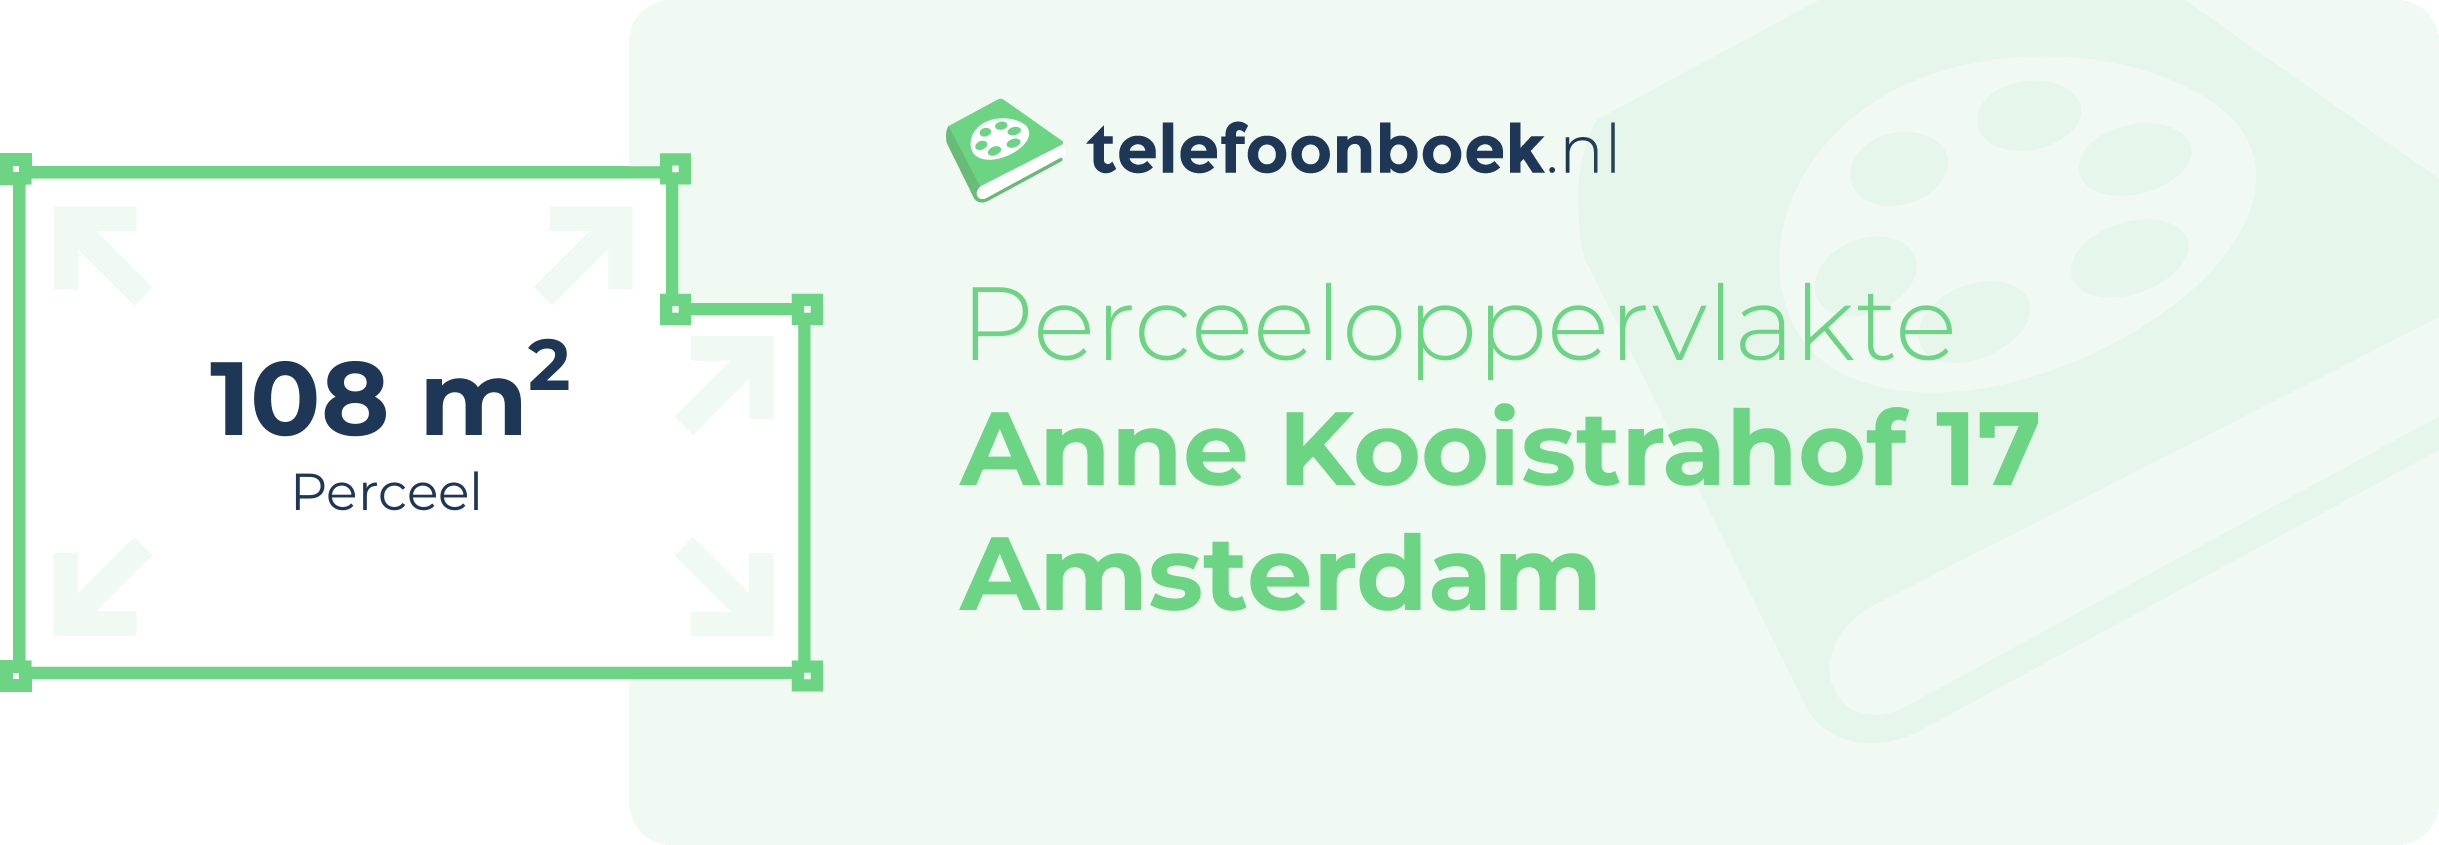 Perceeloppervlakte Anne Kooistrahof 17 Amsterdam